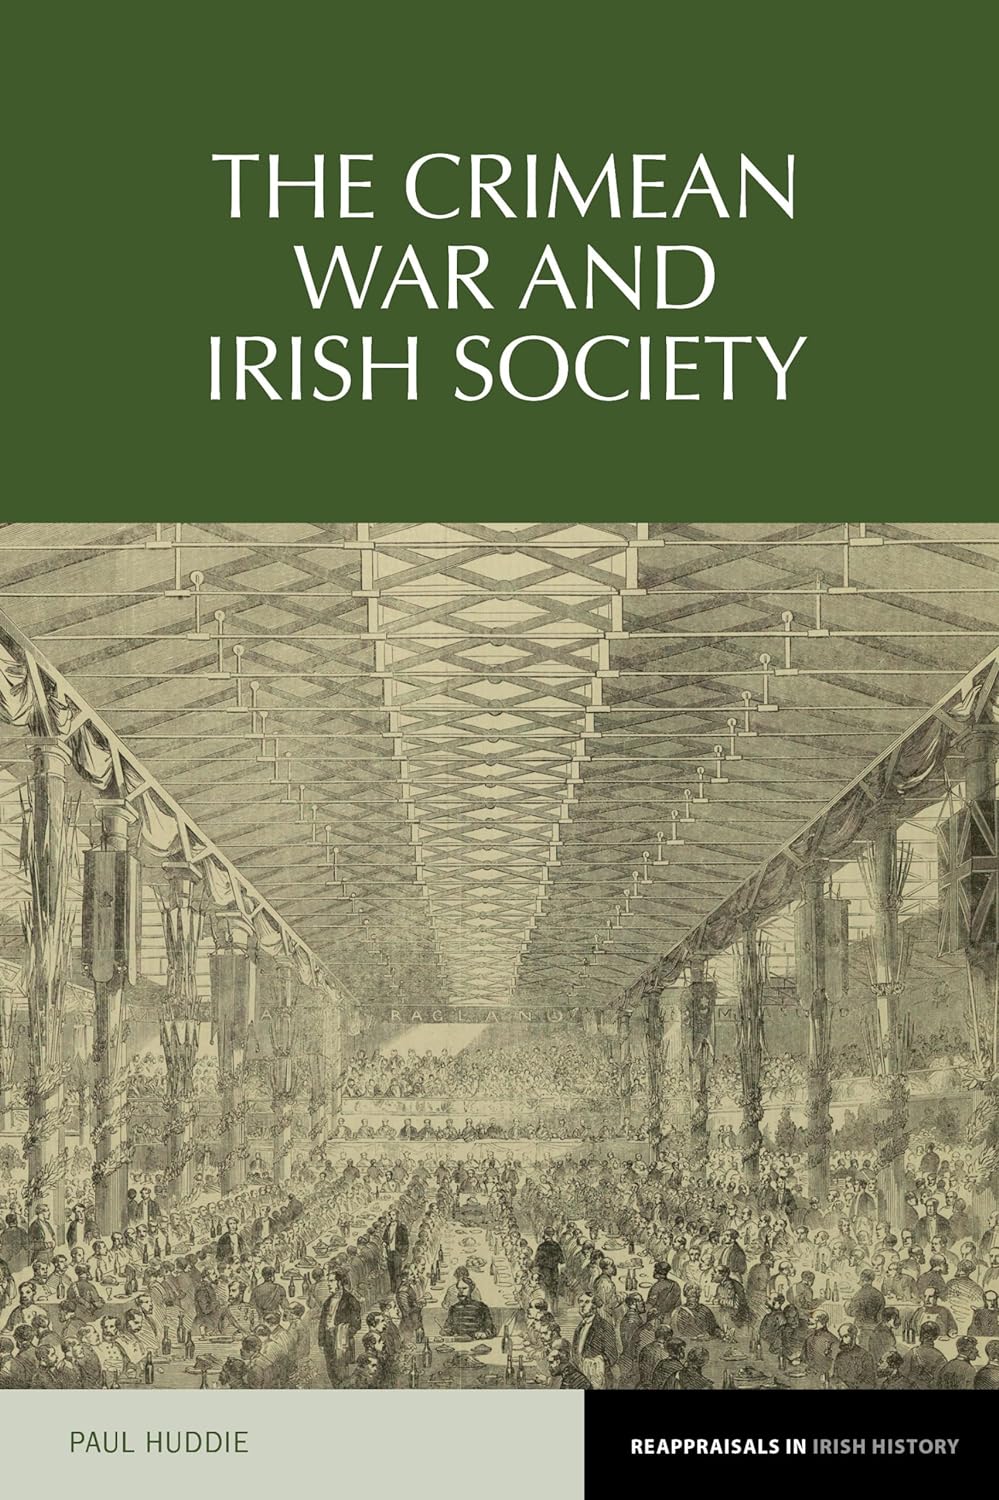 The Crimean War and Irish Society, by Paul Huddie